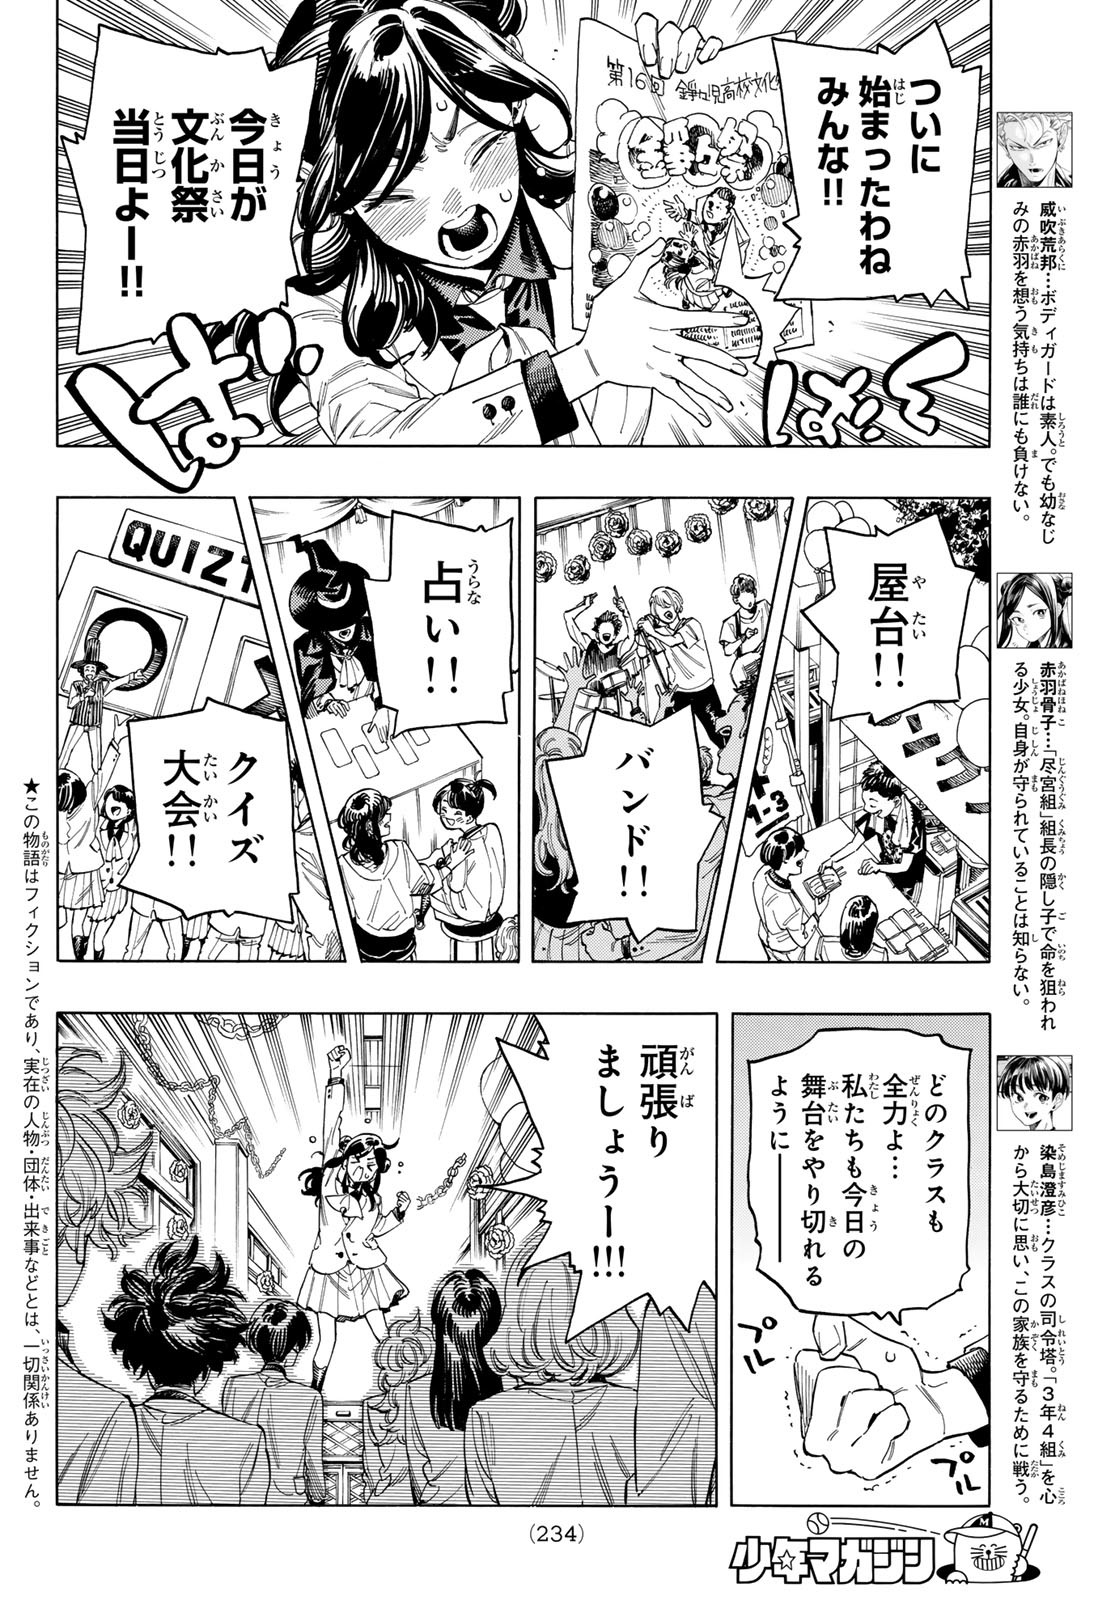 Akabane Honeko no Bodyguard - Chapter 58 - Page 2